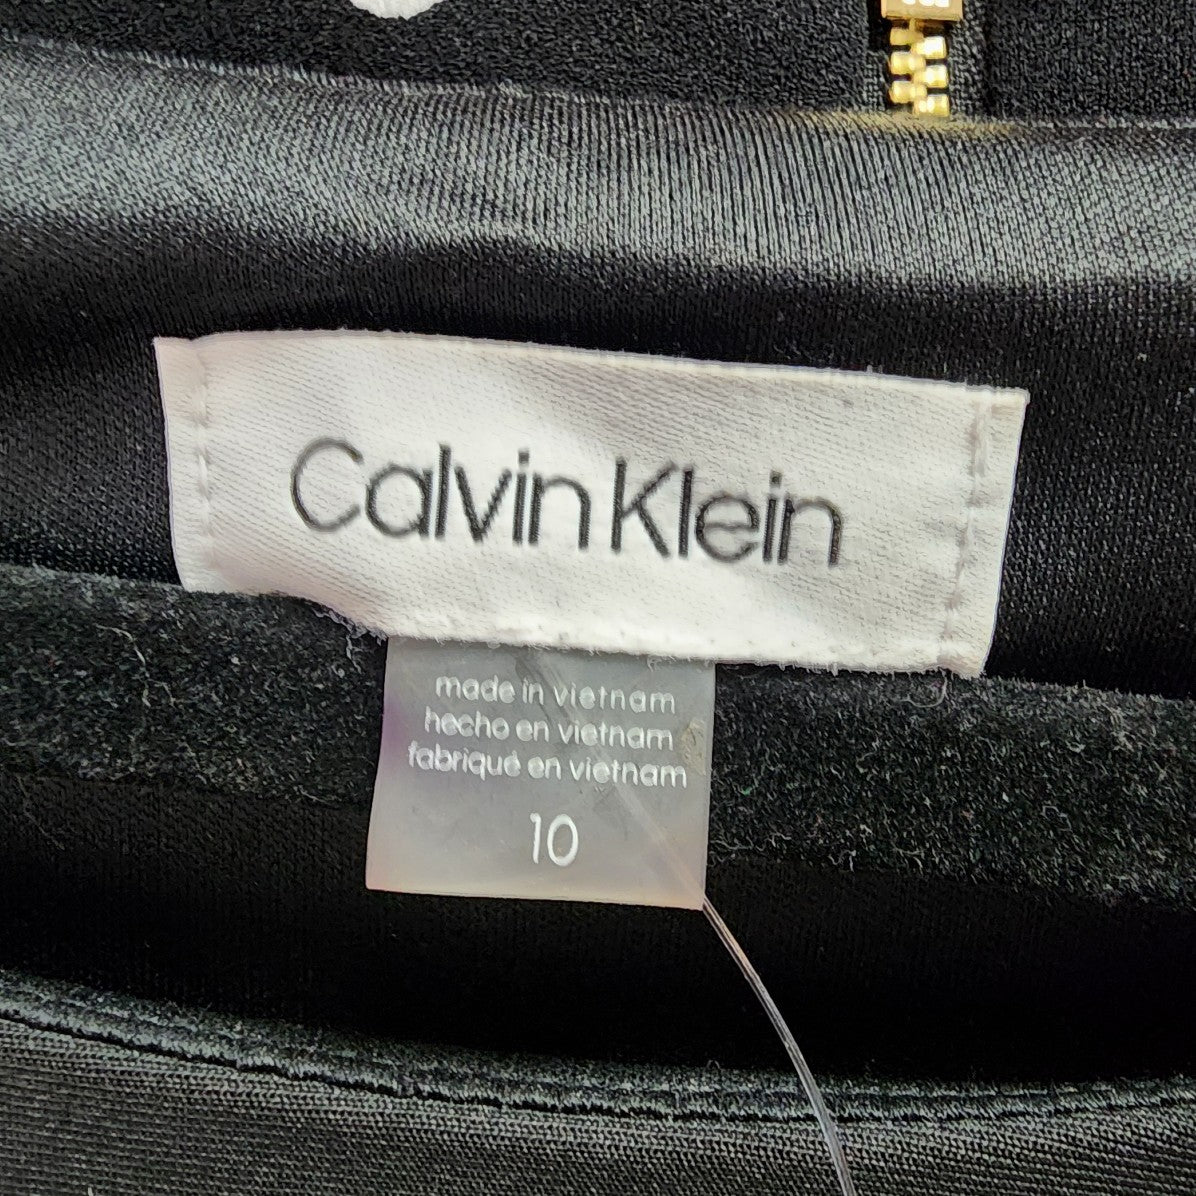 Calvin Klein Black Embroidered Floral Sheath Dress Size 10